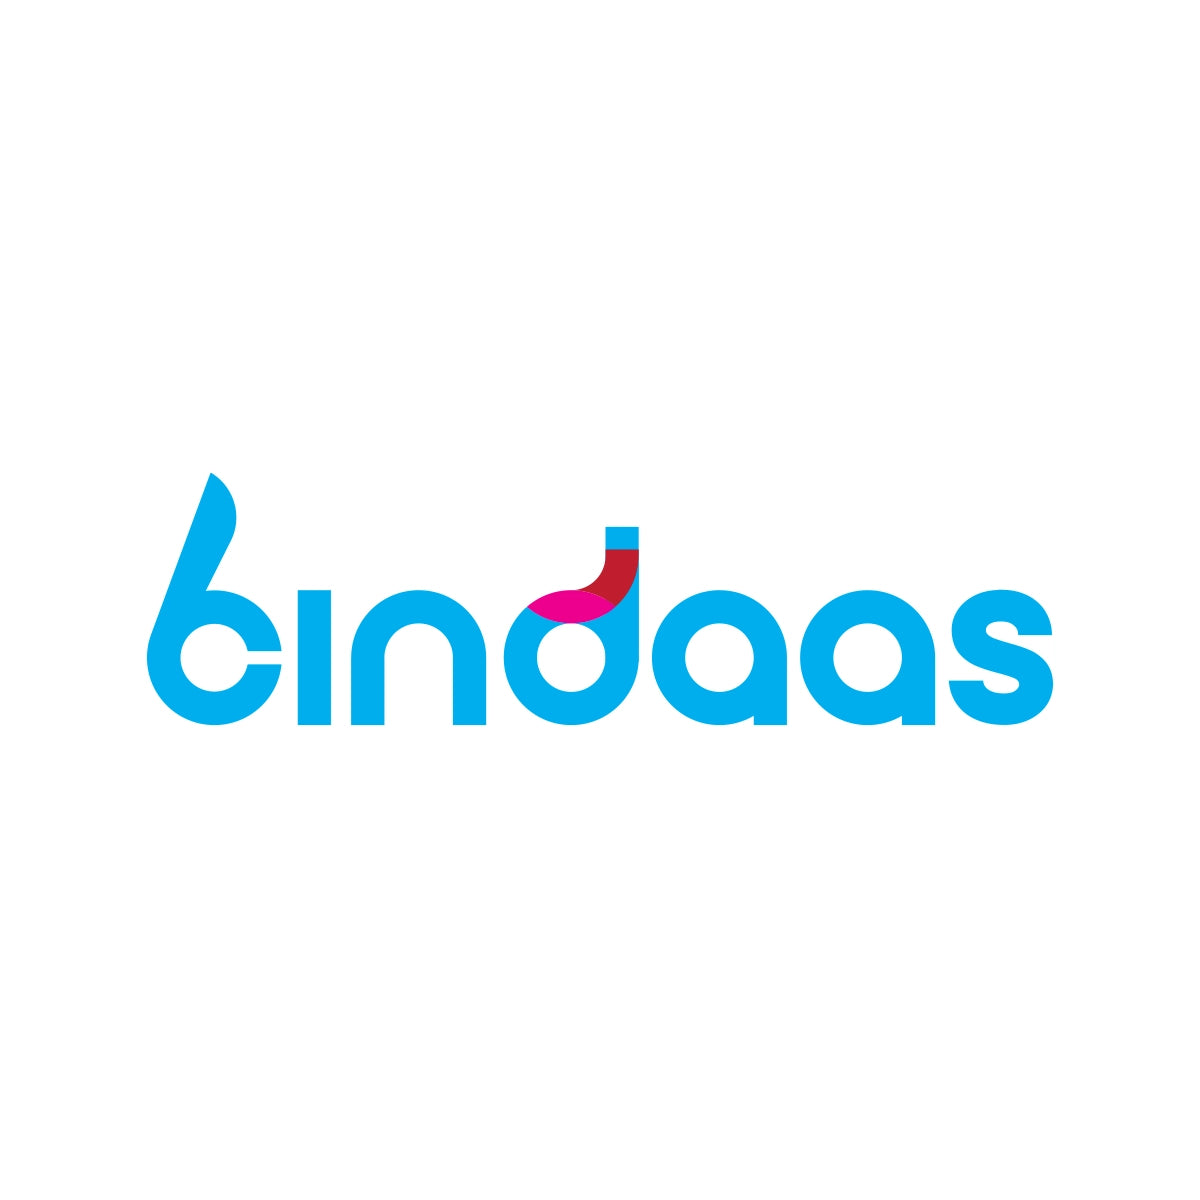 bindaas.com